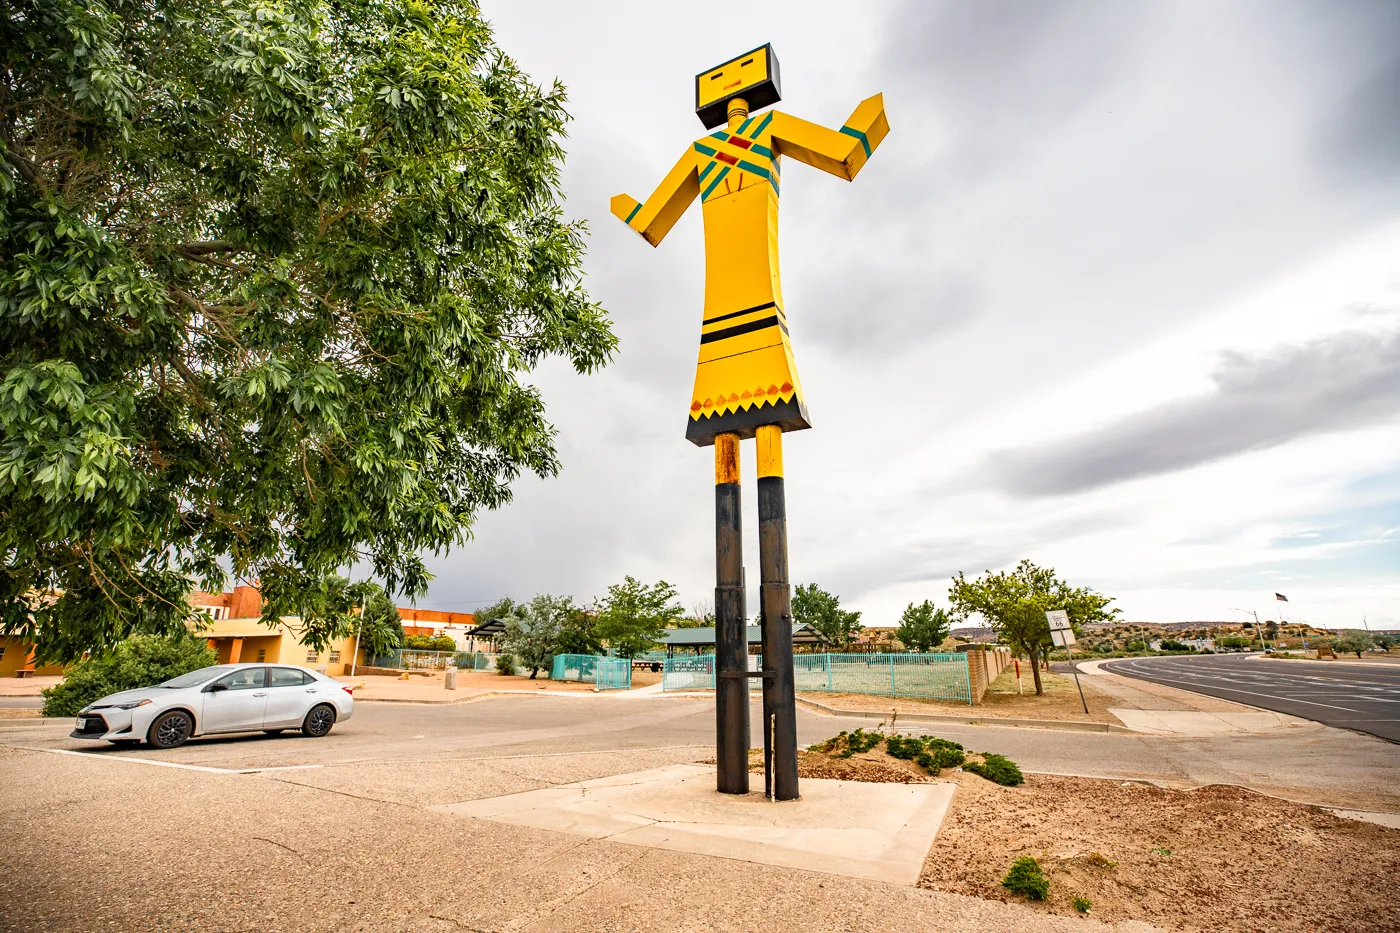 Big Kachina Statue in Gallup, New Mexico Route 66 Roadside Attraction